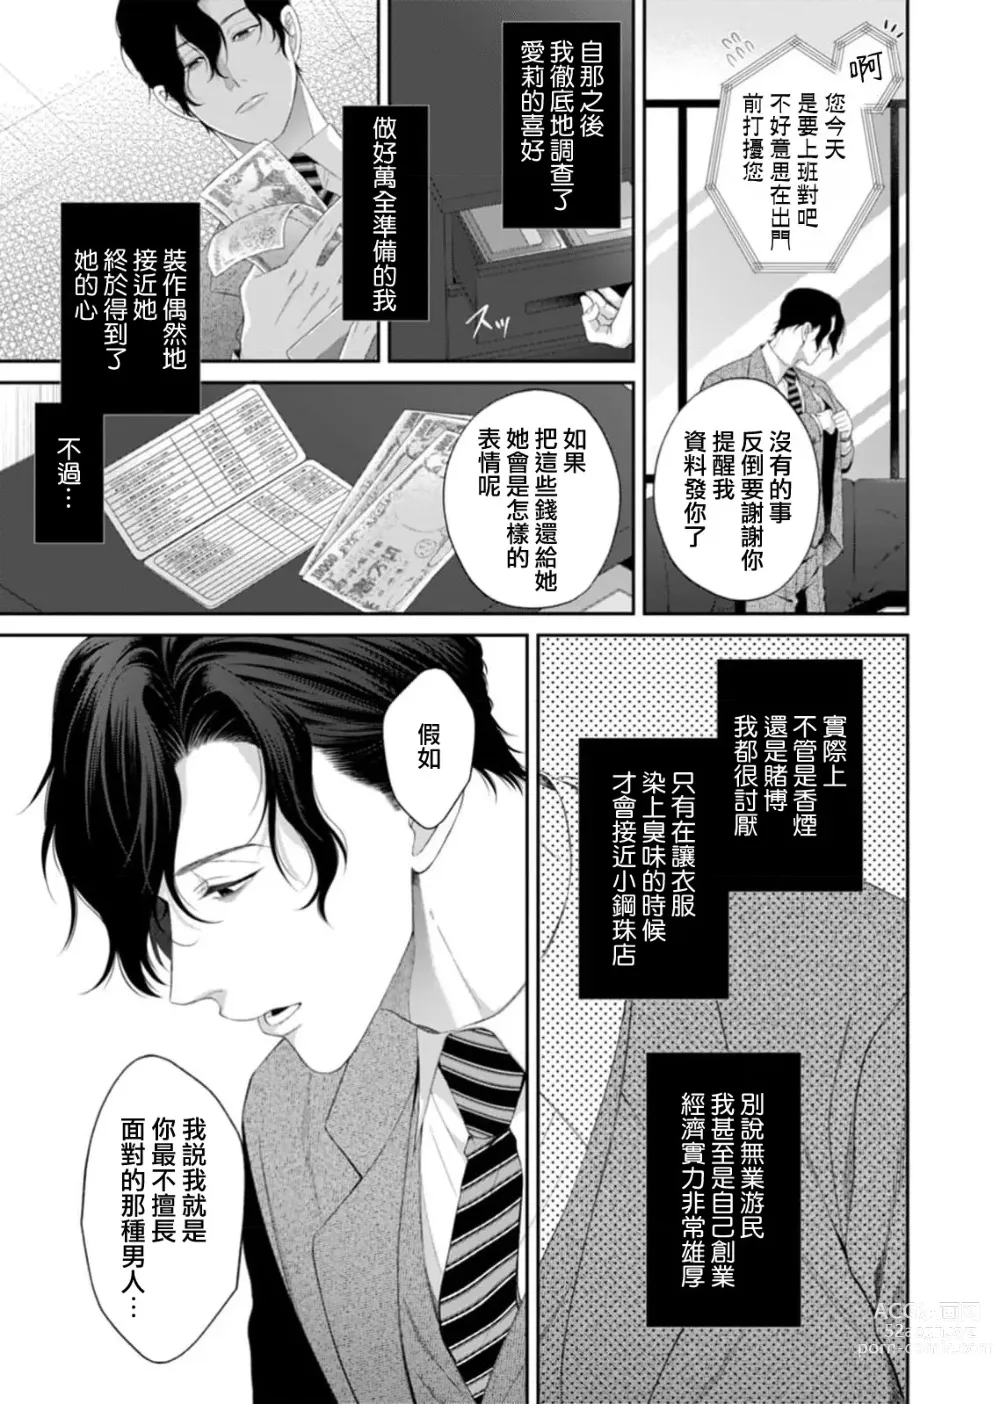 Page 24 of manga 将你所期望的悉数奉上——与另有隐情的软饭男友、深陷于令人沉溺的执着H